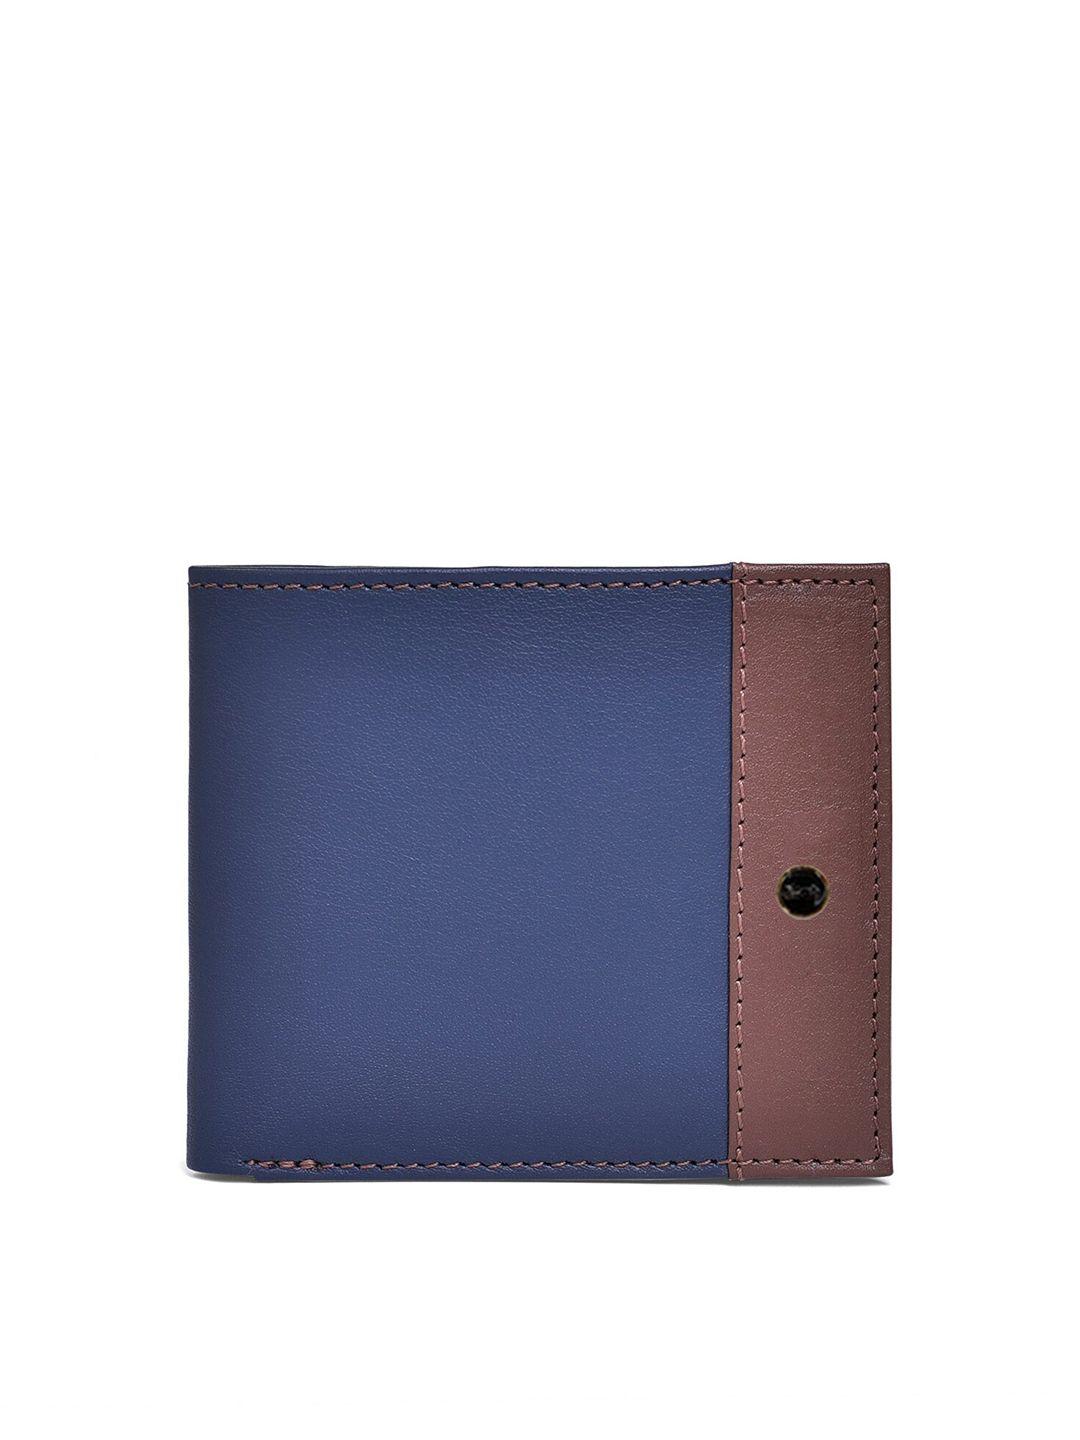 belwaba men navy blue & brown colourblocked leather two fold wallet